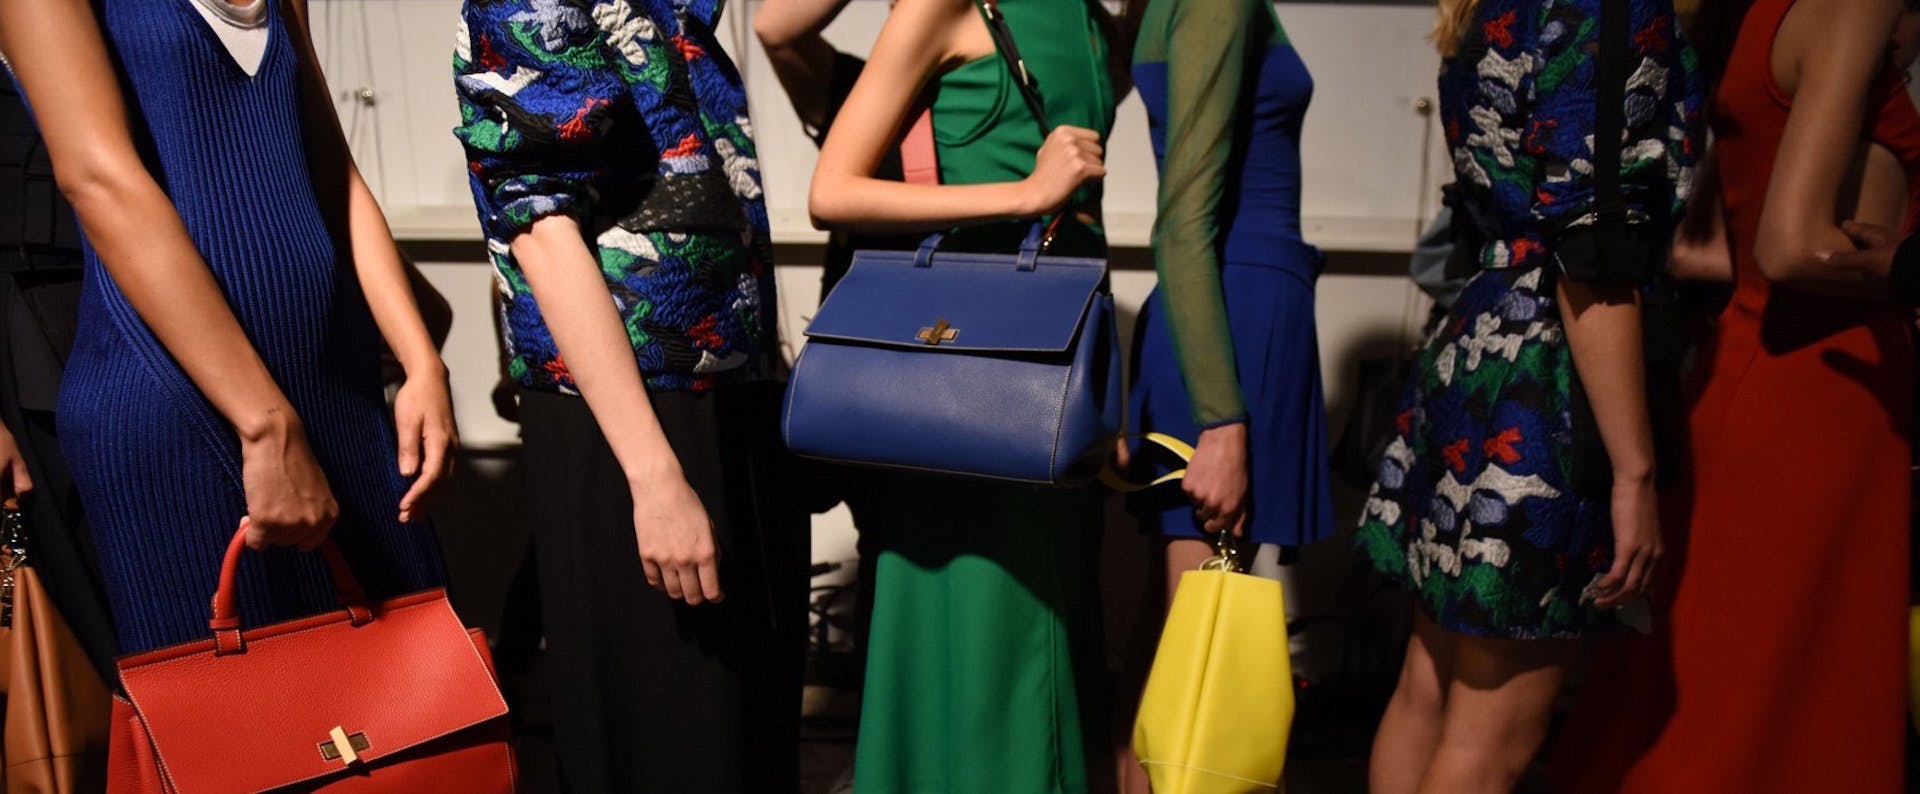 person human handbag accessories bag accessory clothing apparel purse